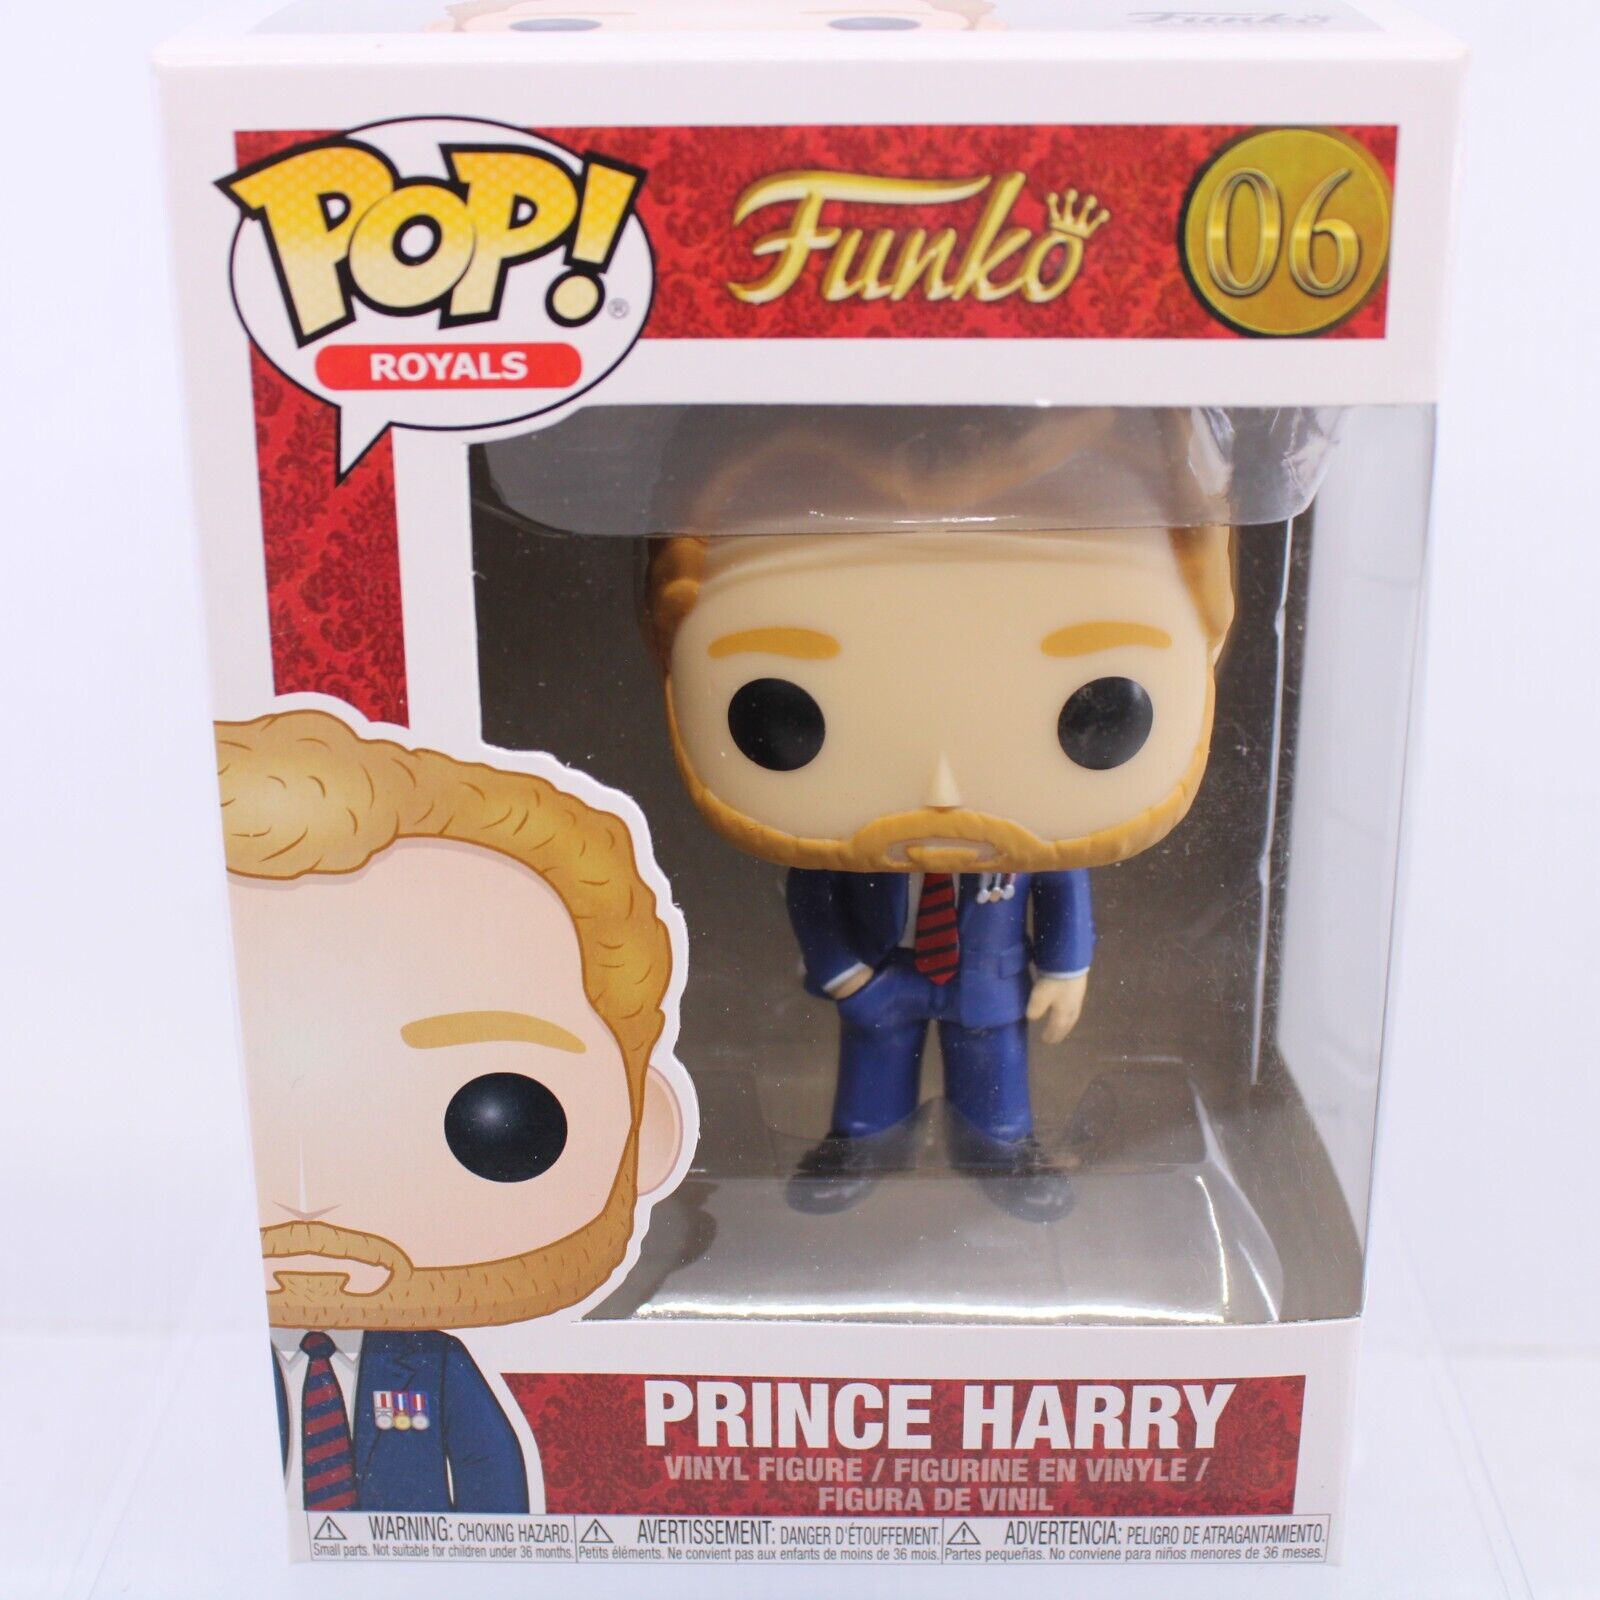 G2 Funko Pop Royals Prince Harry Vinyl Figure 06